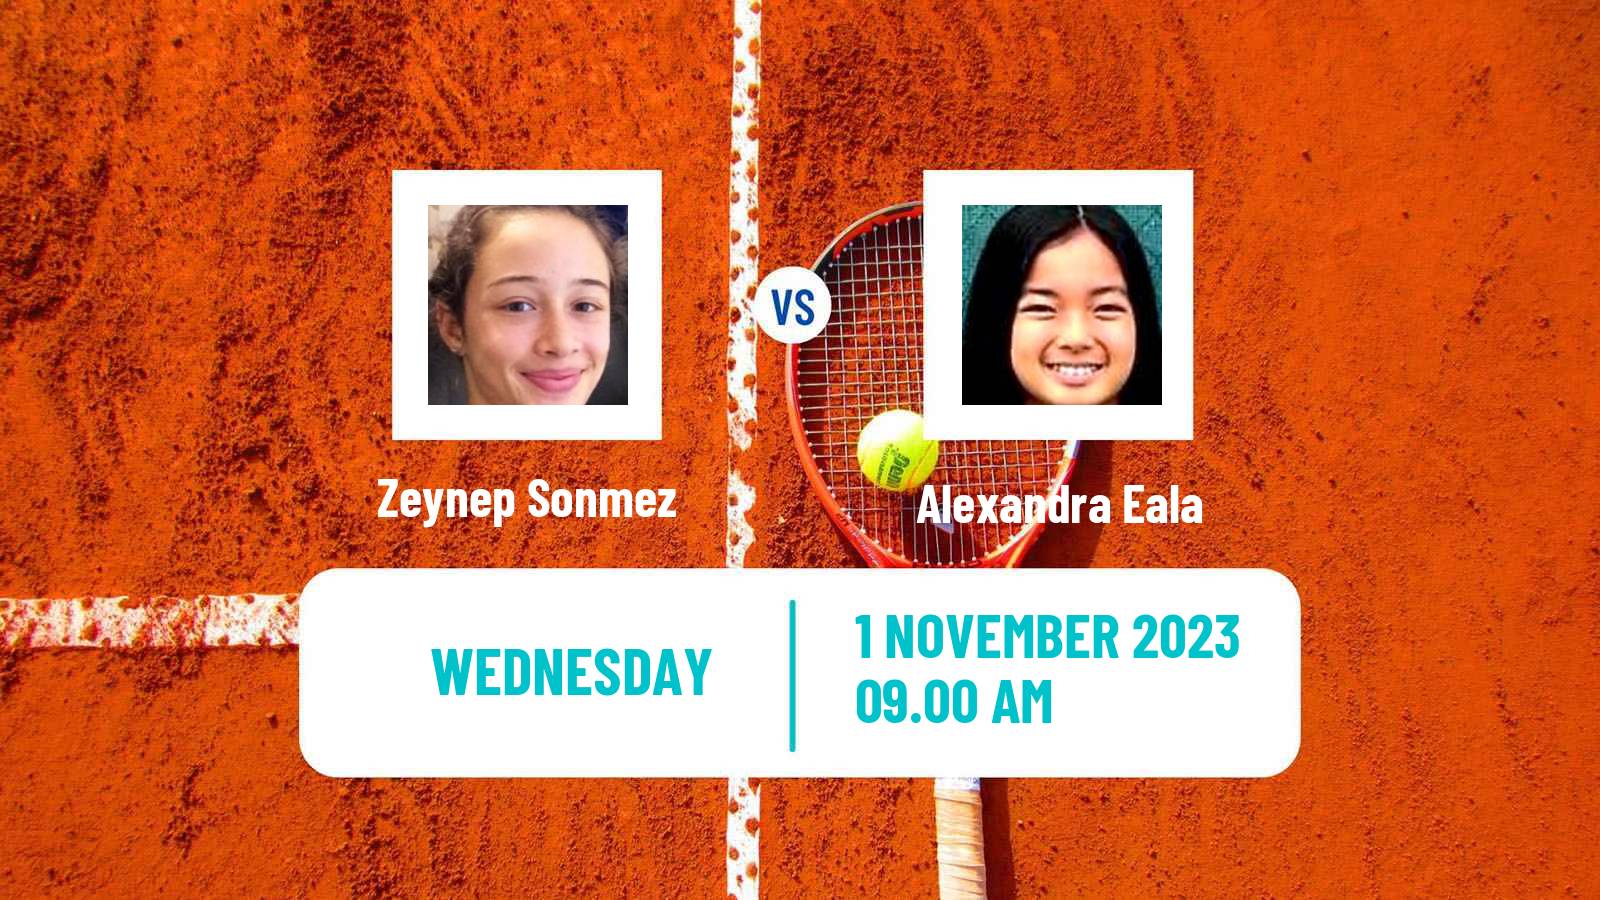 Tennis ITF W60 Nantes Women Zeynep Sonmez - Alexandra Eala